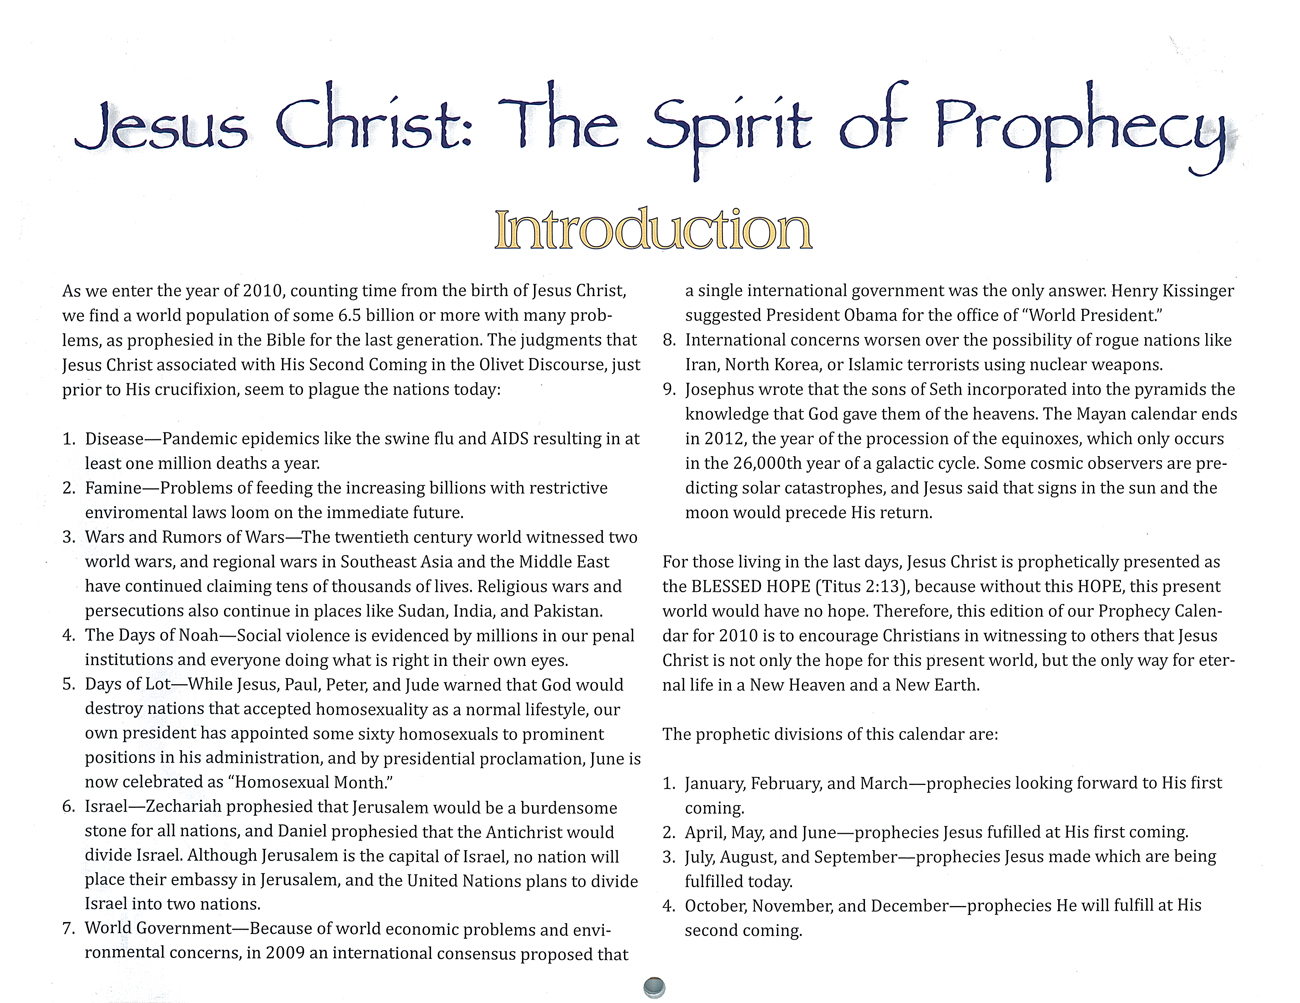 2010 Prophecy Calendar: Jesus Christ: The Spirit of Prophecy